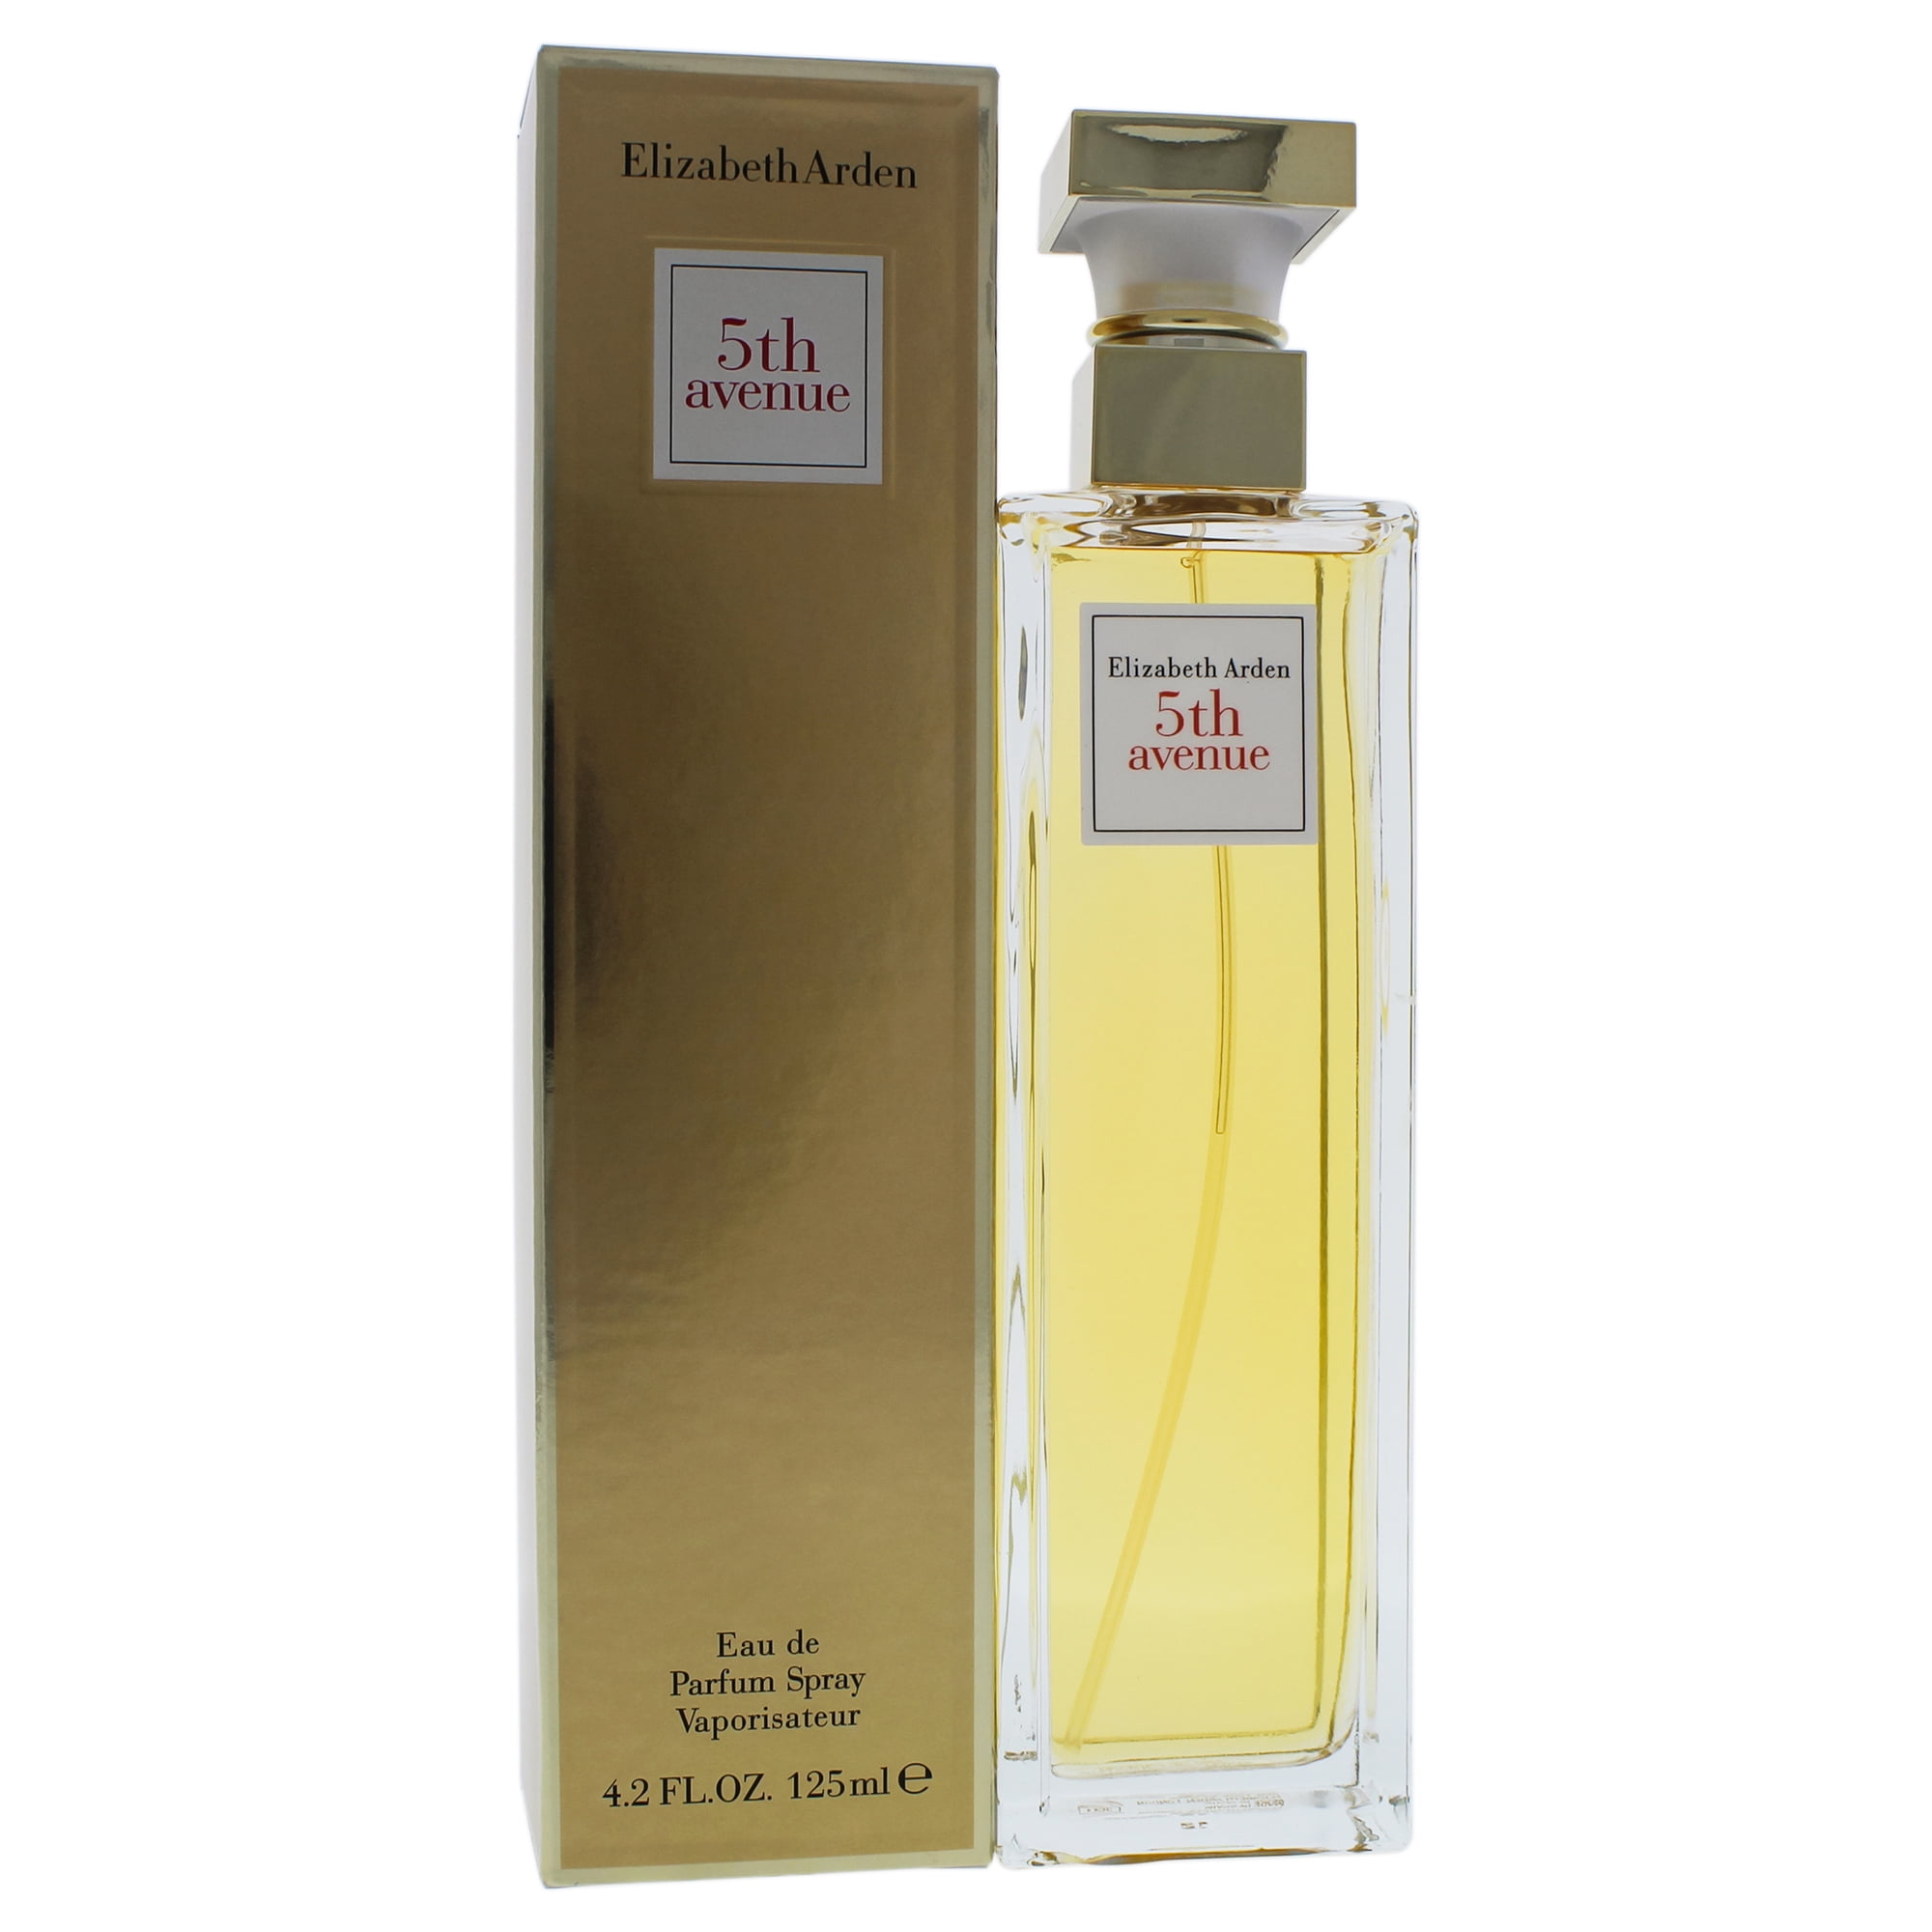 Elizabeth Arden - The Perfume Society